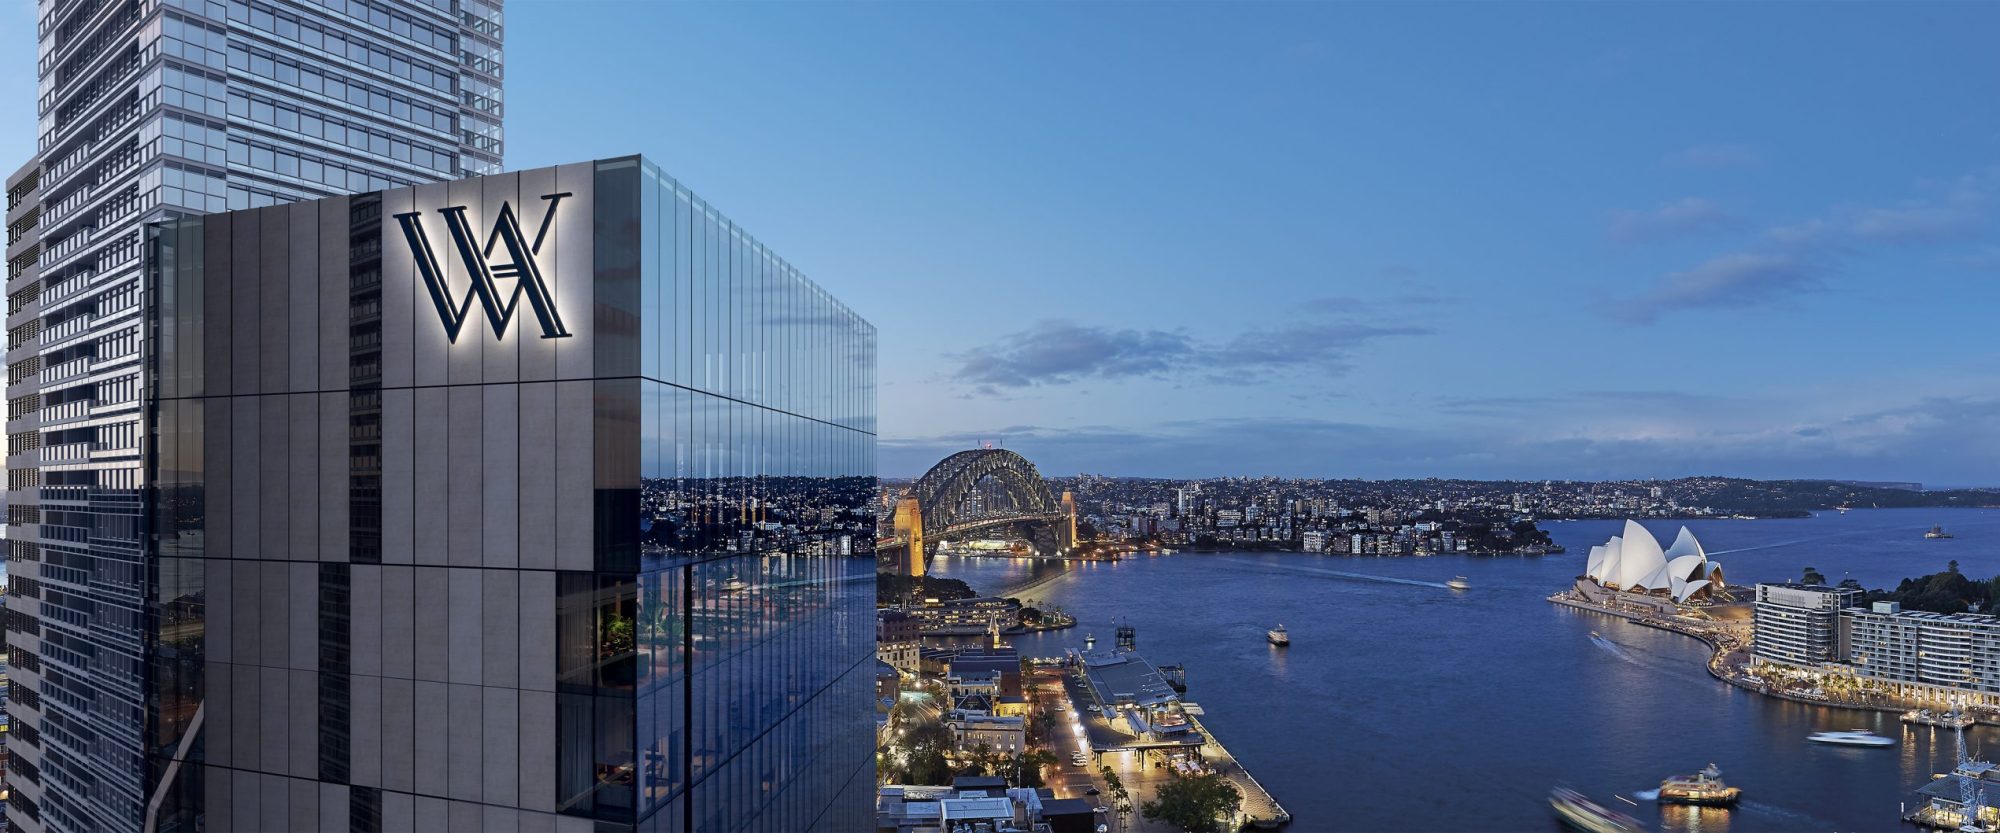 First stores open in new Sydney luxury precinct